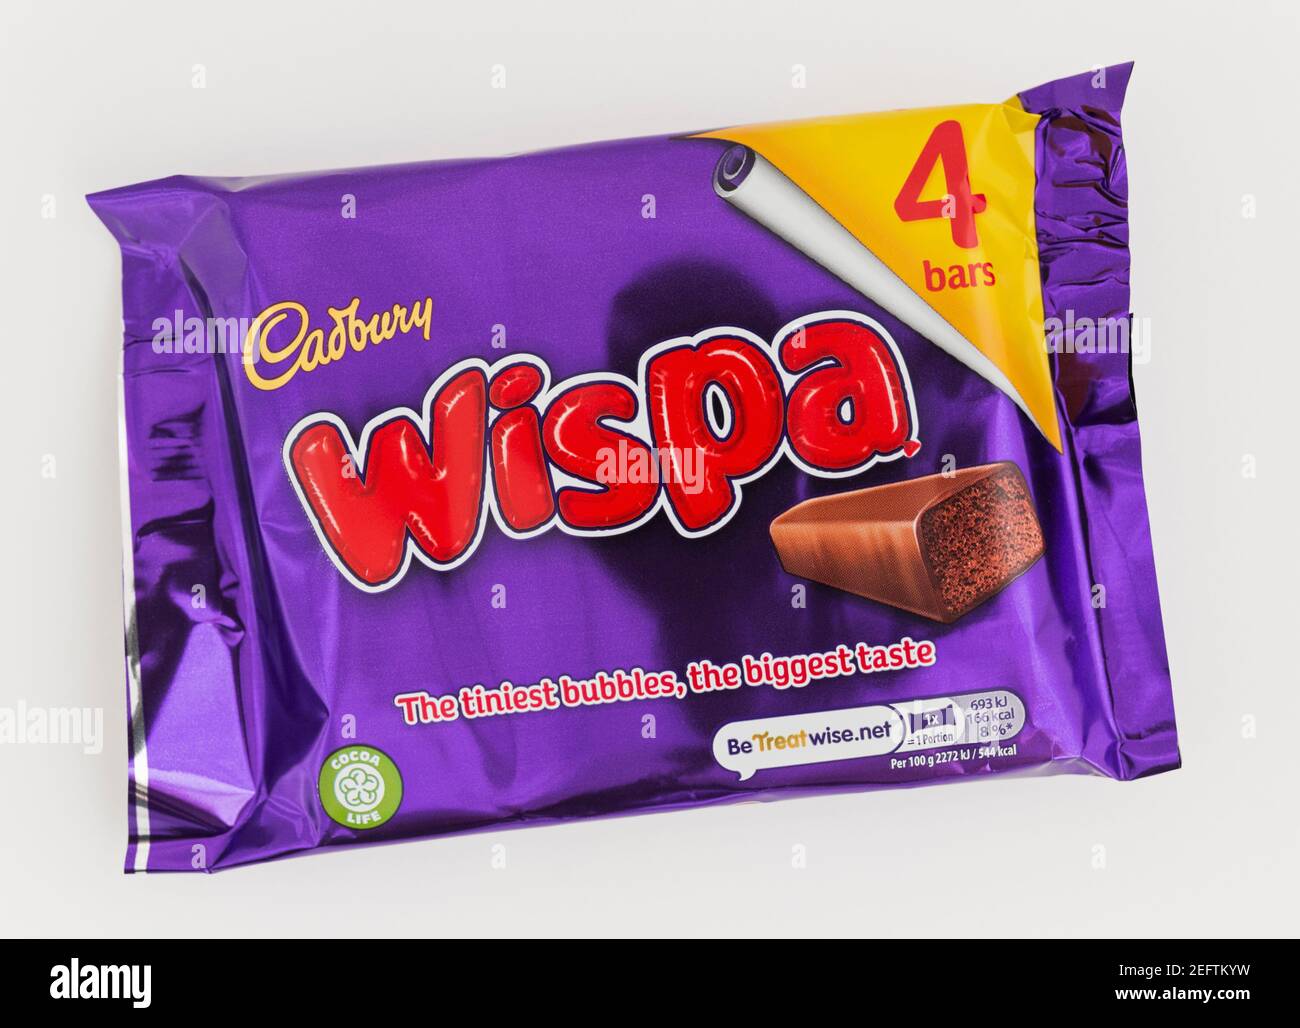 Cadbury Wispa Gold Bar - Pack of 6 by Wispa